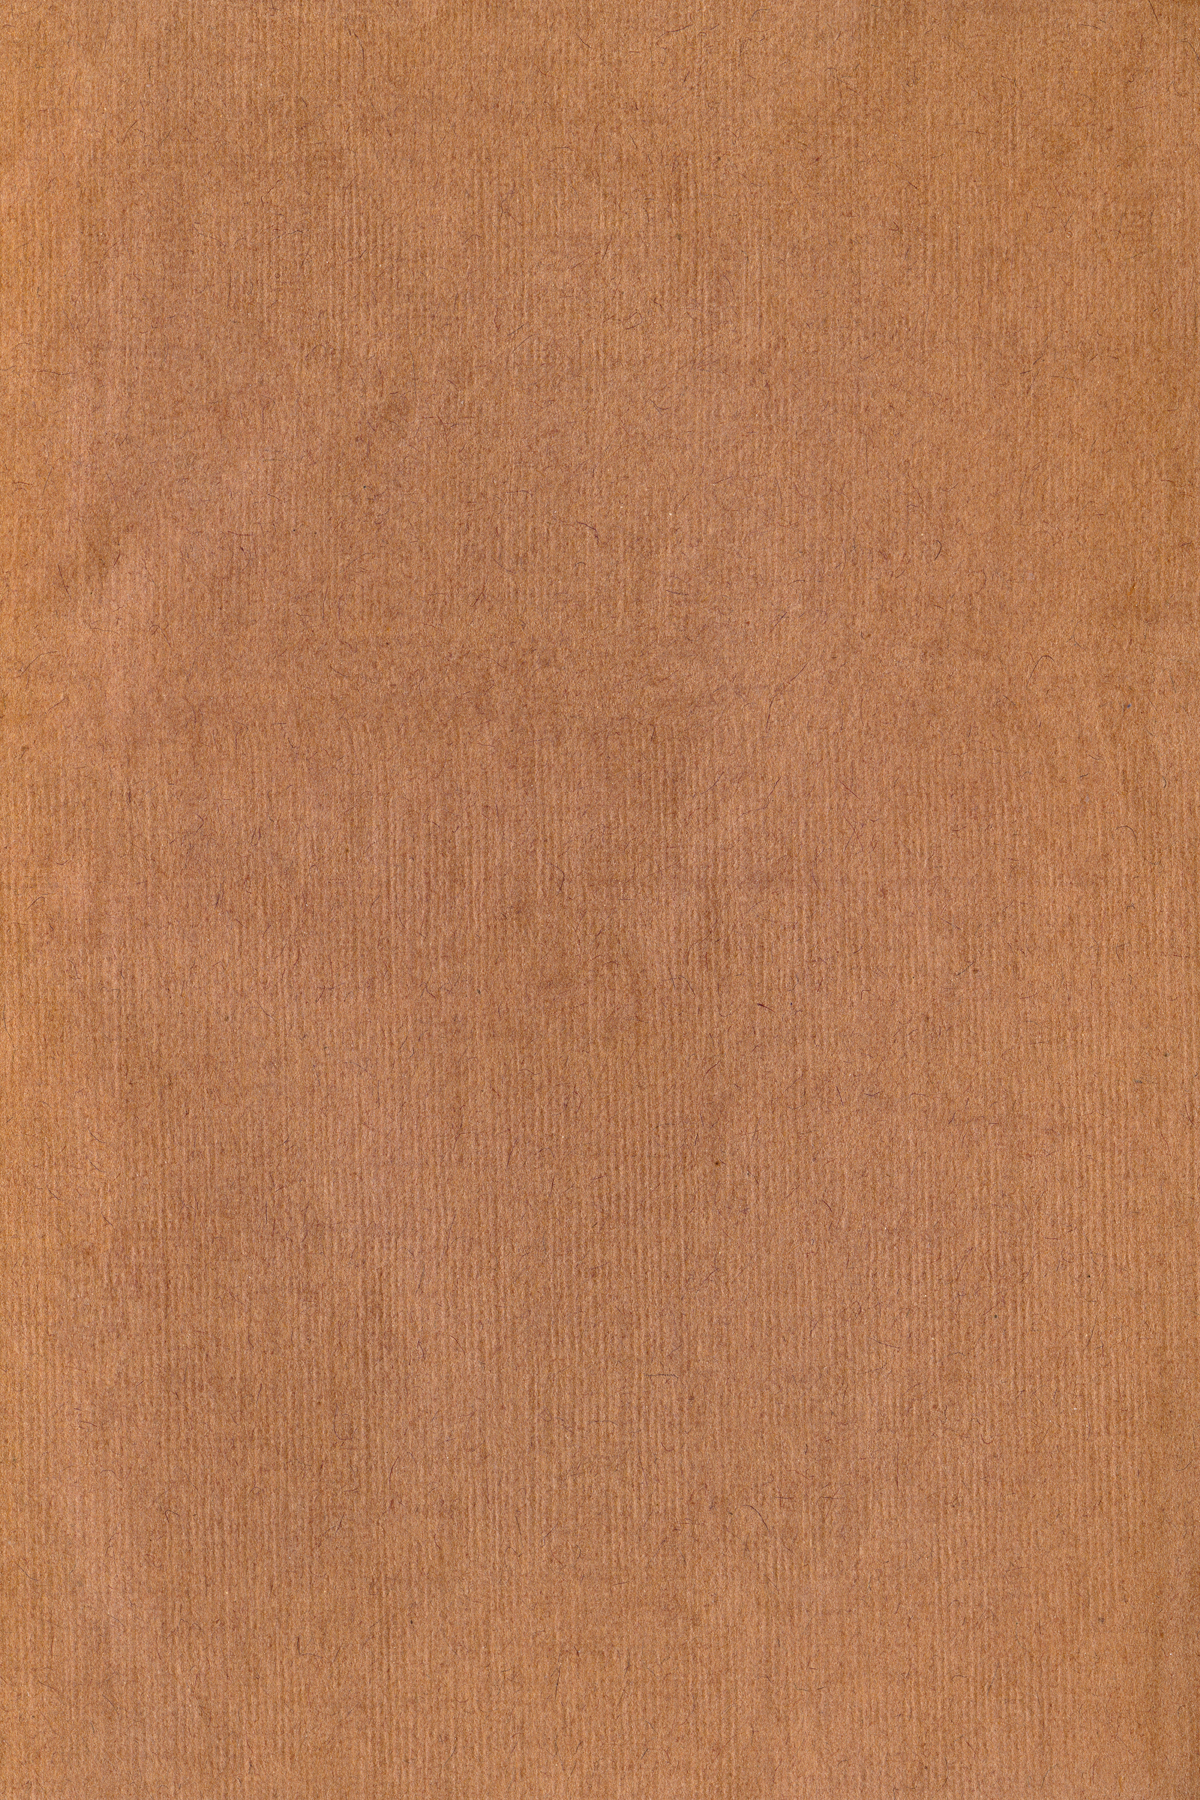 Paper texture - brown canvas photo